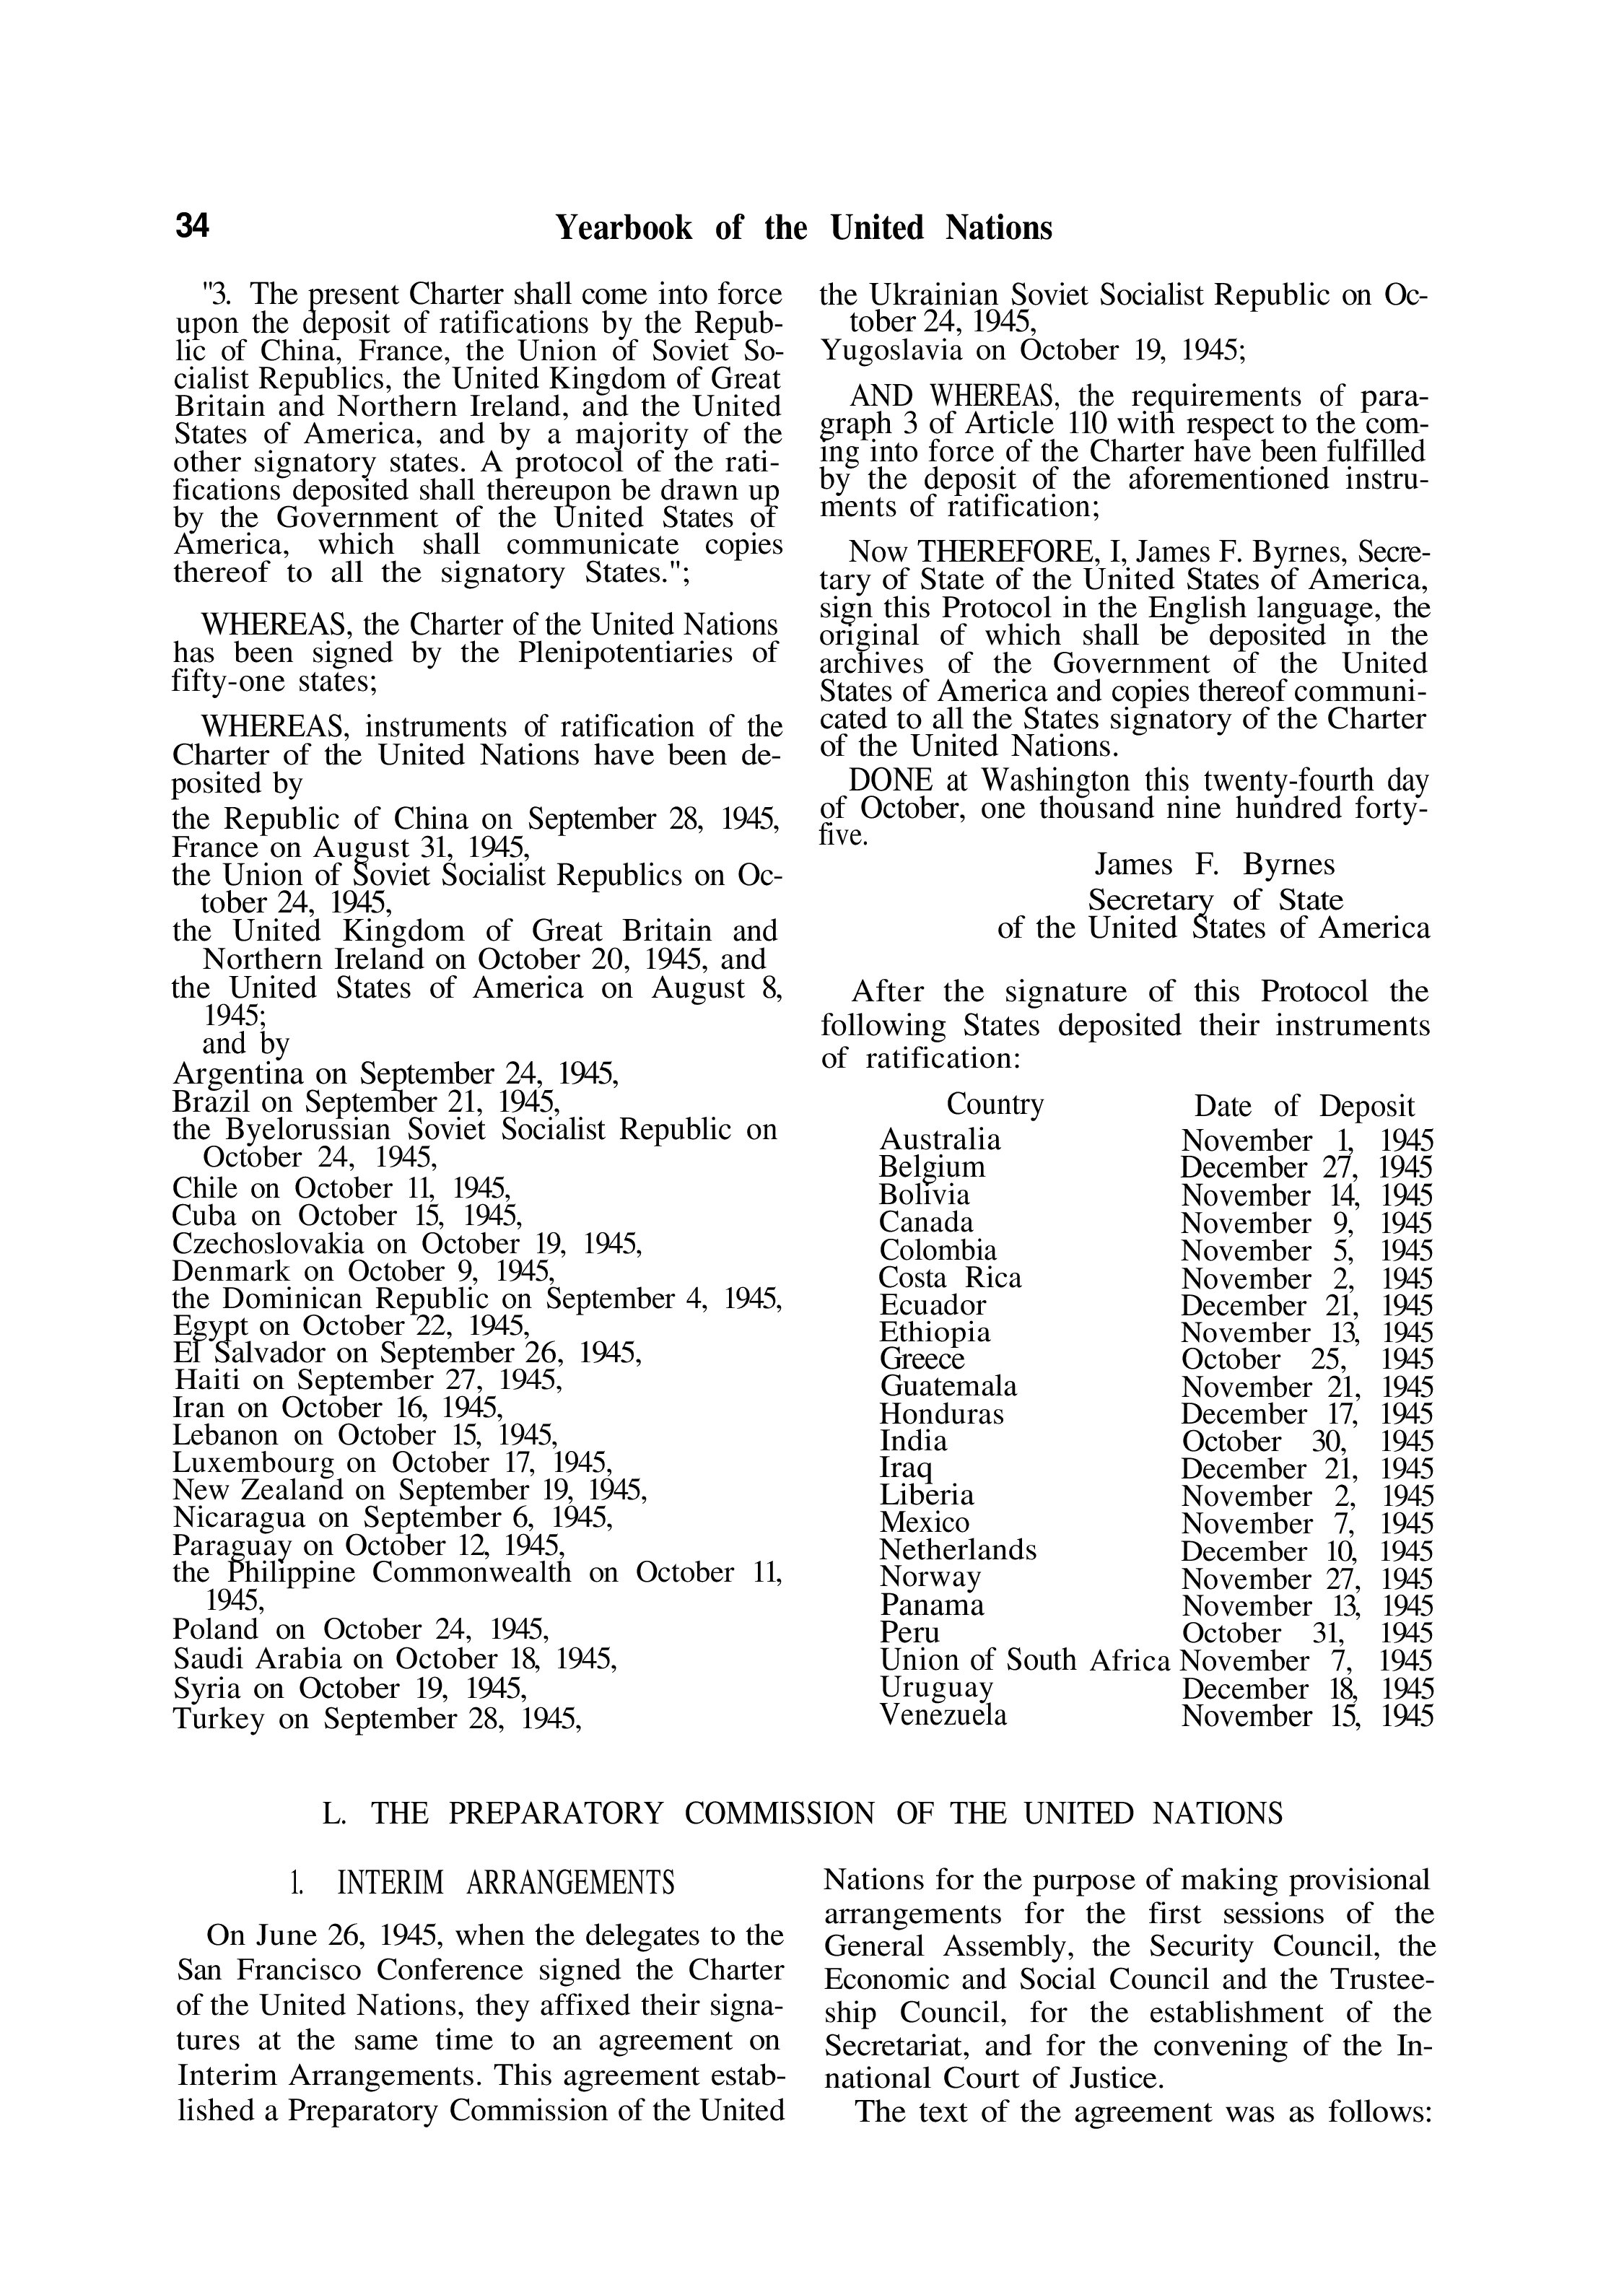 YUN Volume_Page 1946-47_69